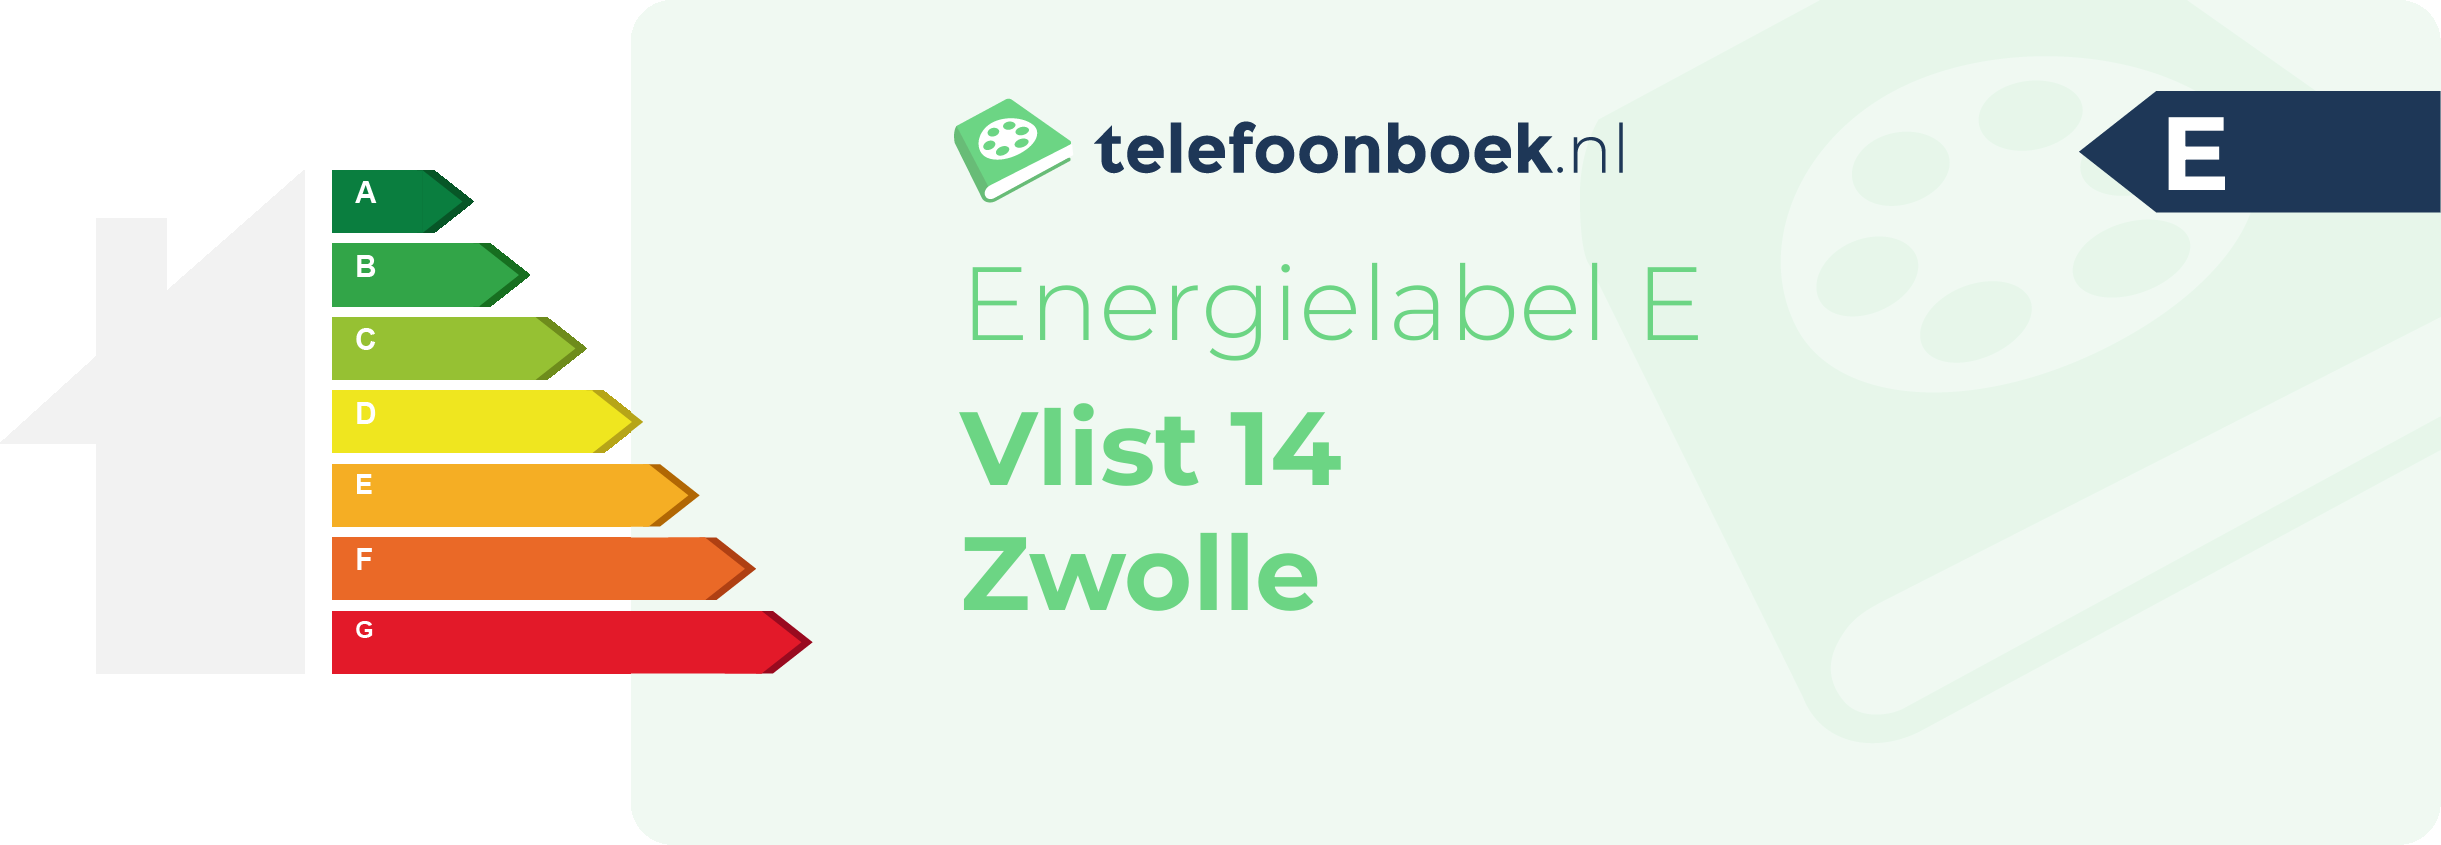 Energielabel Vlist 14 Zwolle